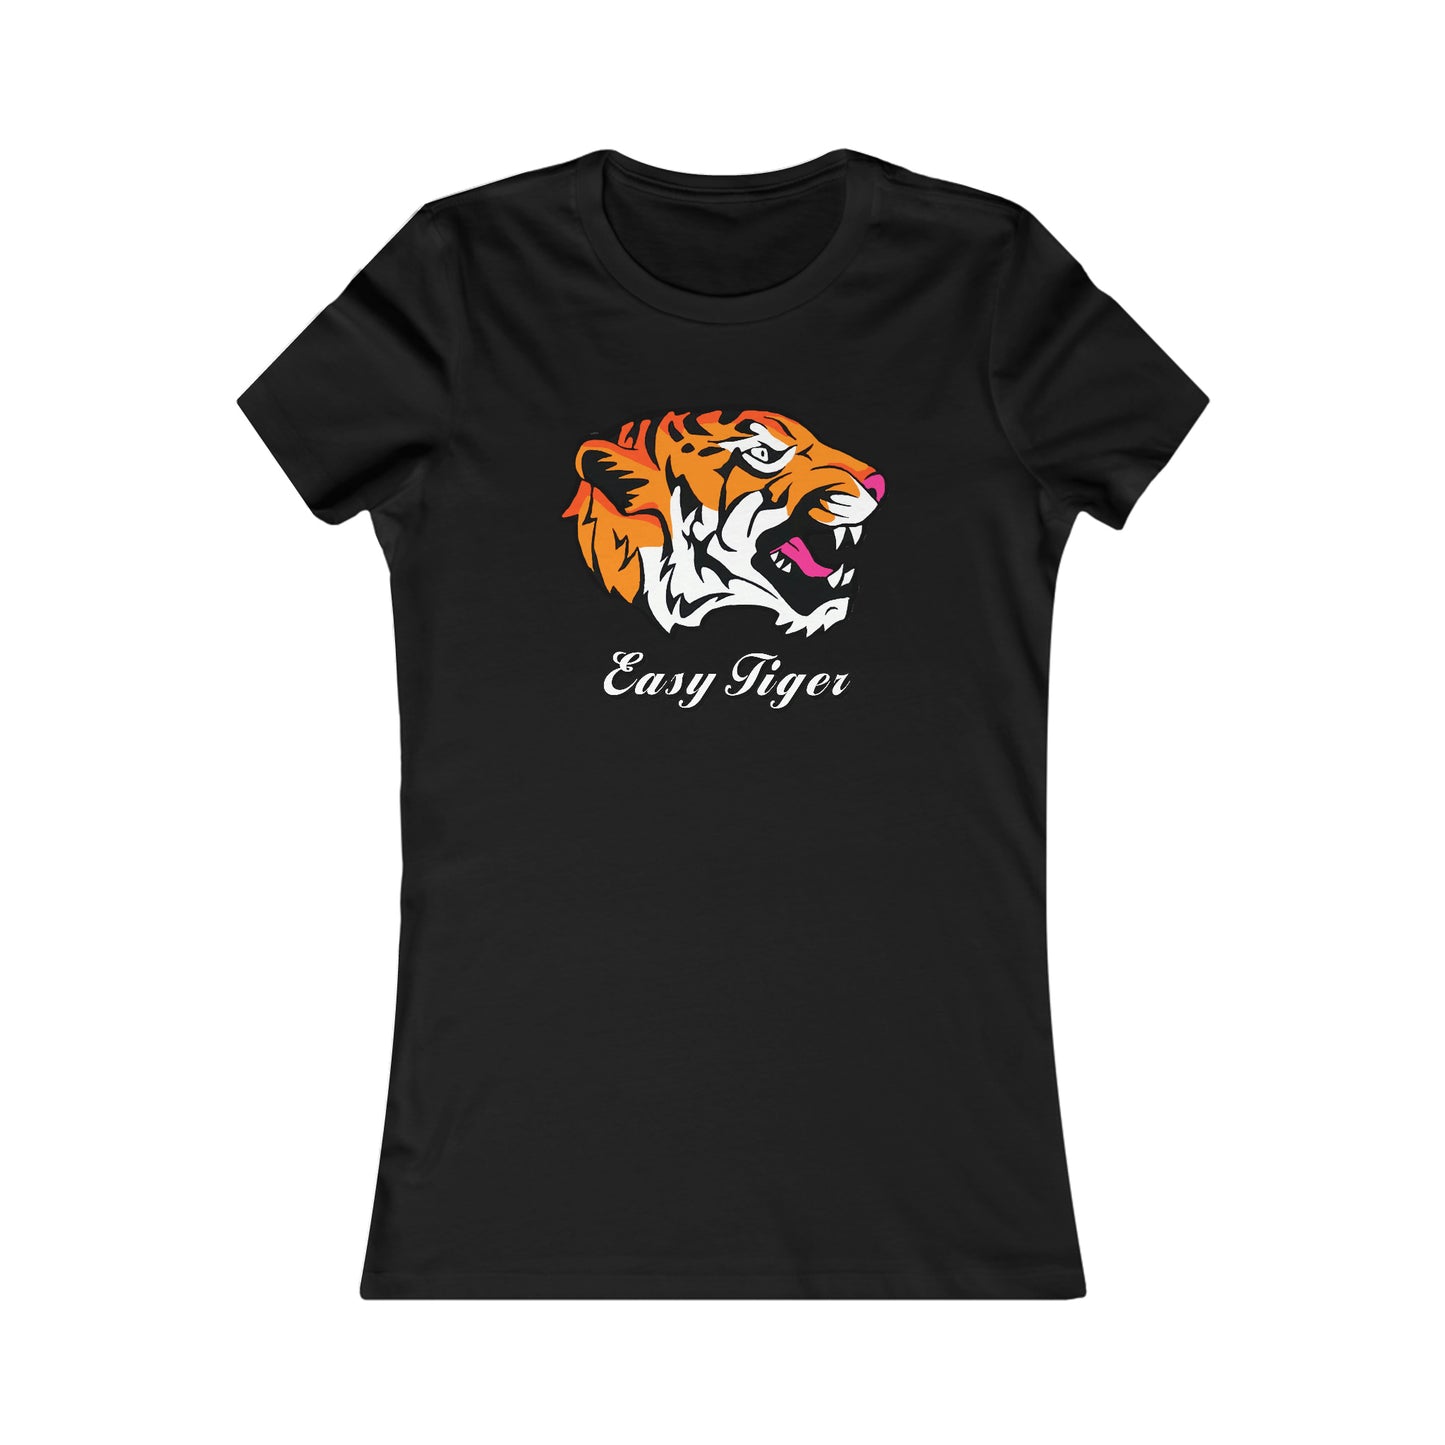 Easy Tiger Women's Favorite Tee